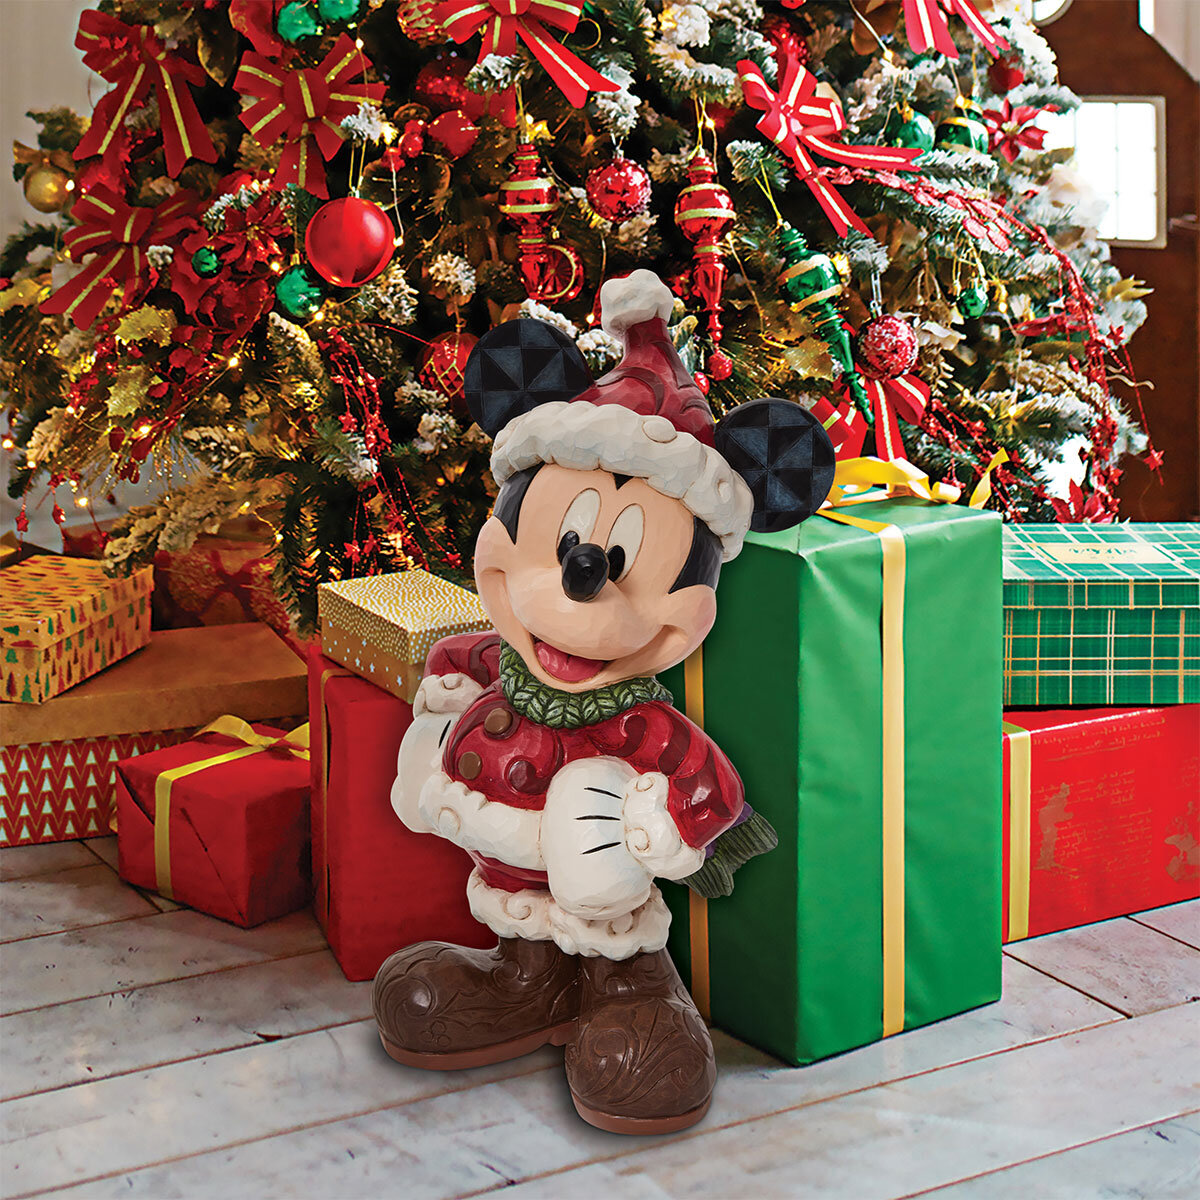 Buy Santa Mickey & Minnie Mickey Lifestyle Image at Costco.co.uk